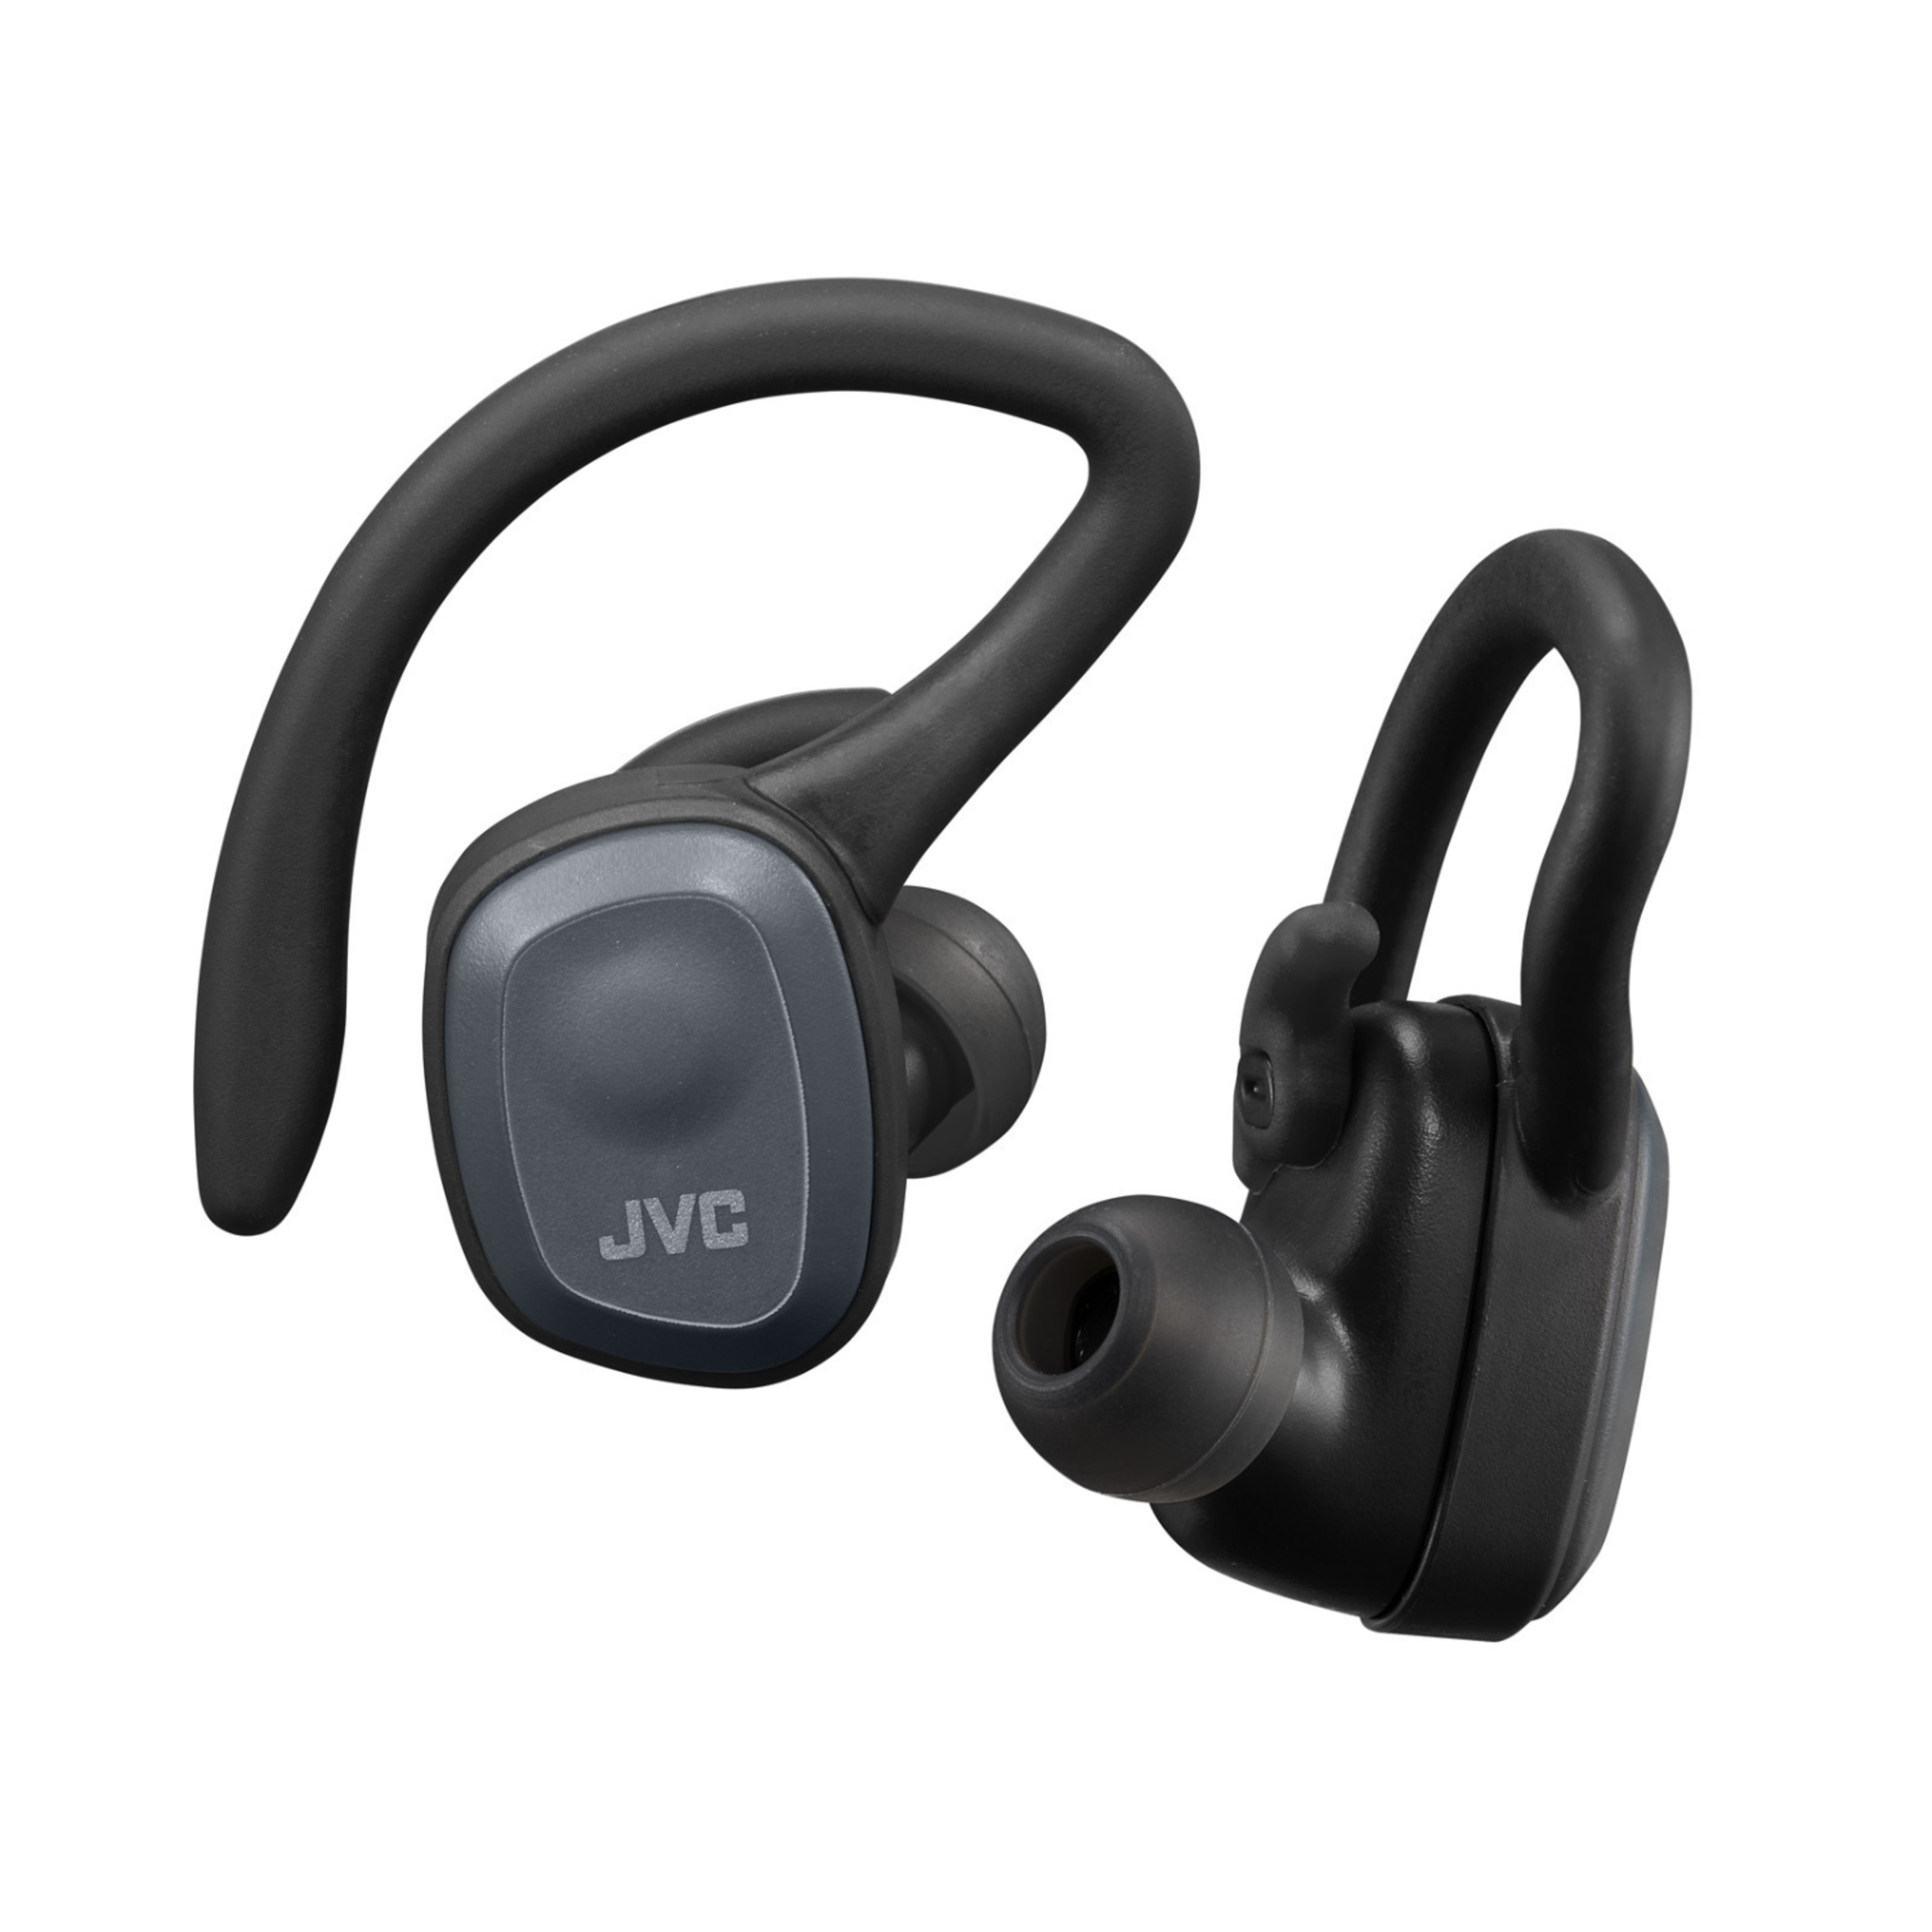 Auriculares Bluetooth Con Micro Jvc Ha-et45t-b-u